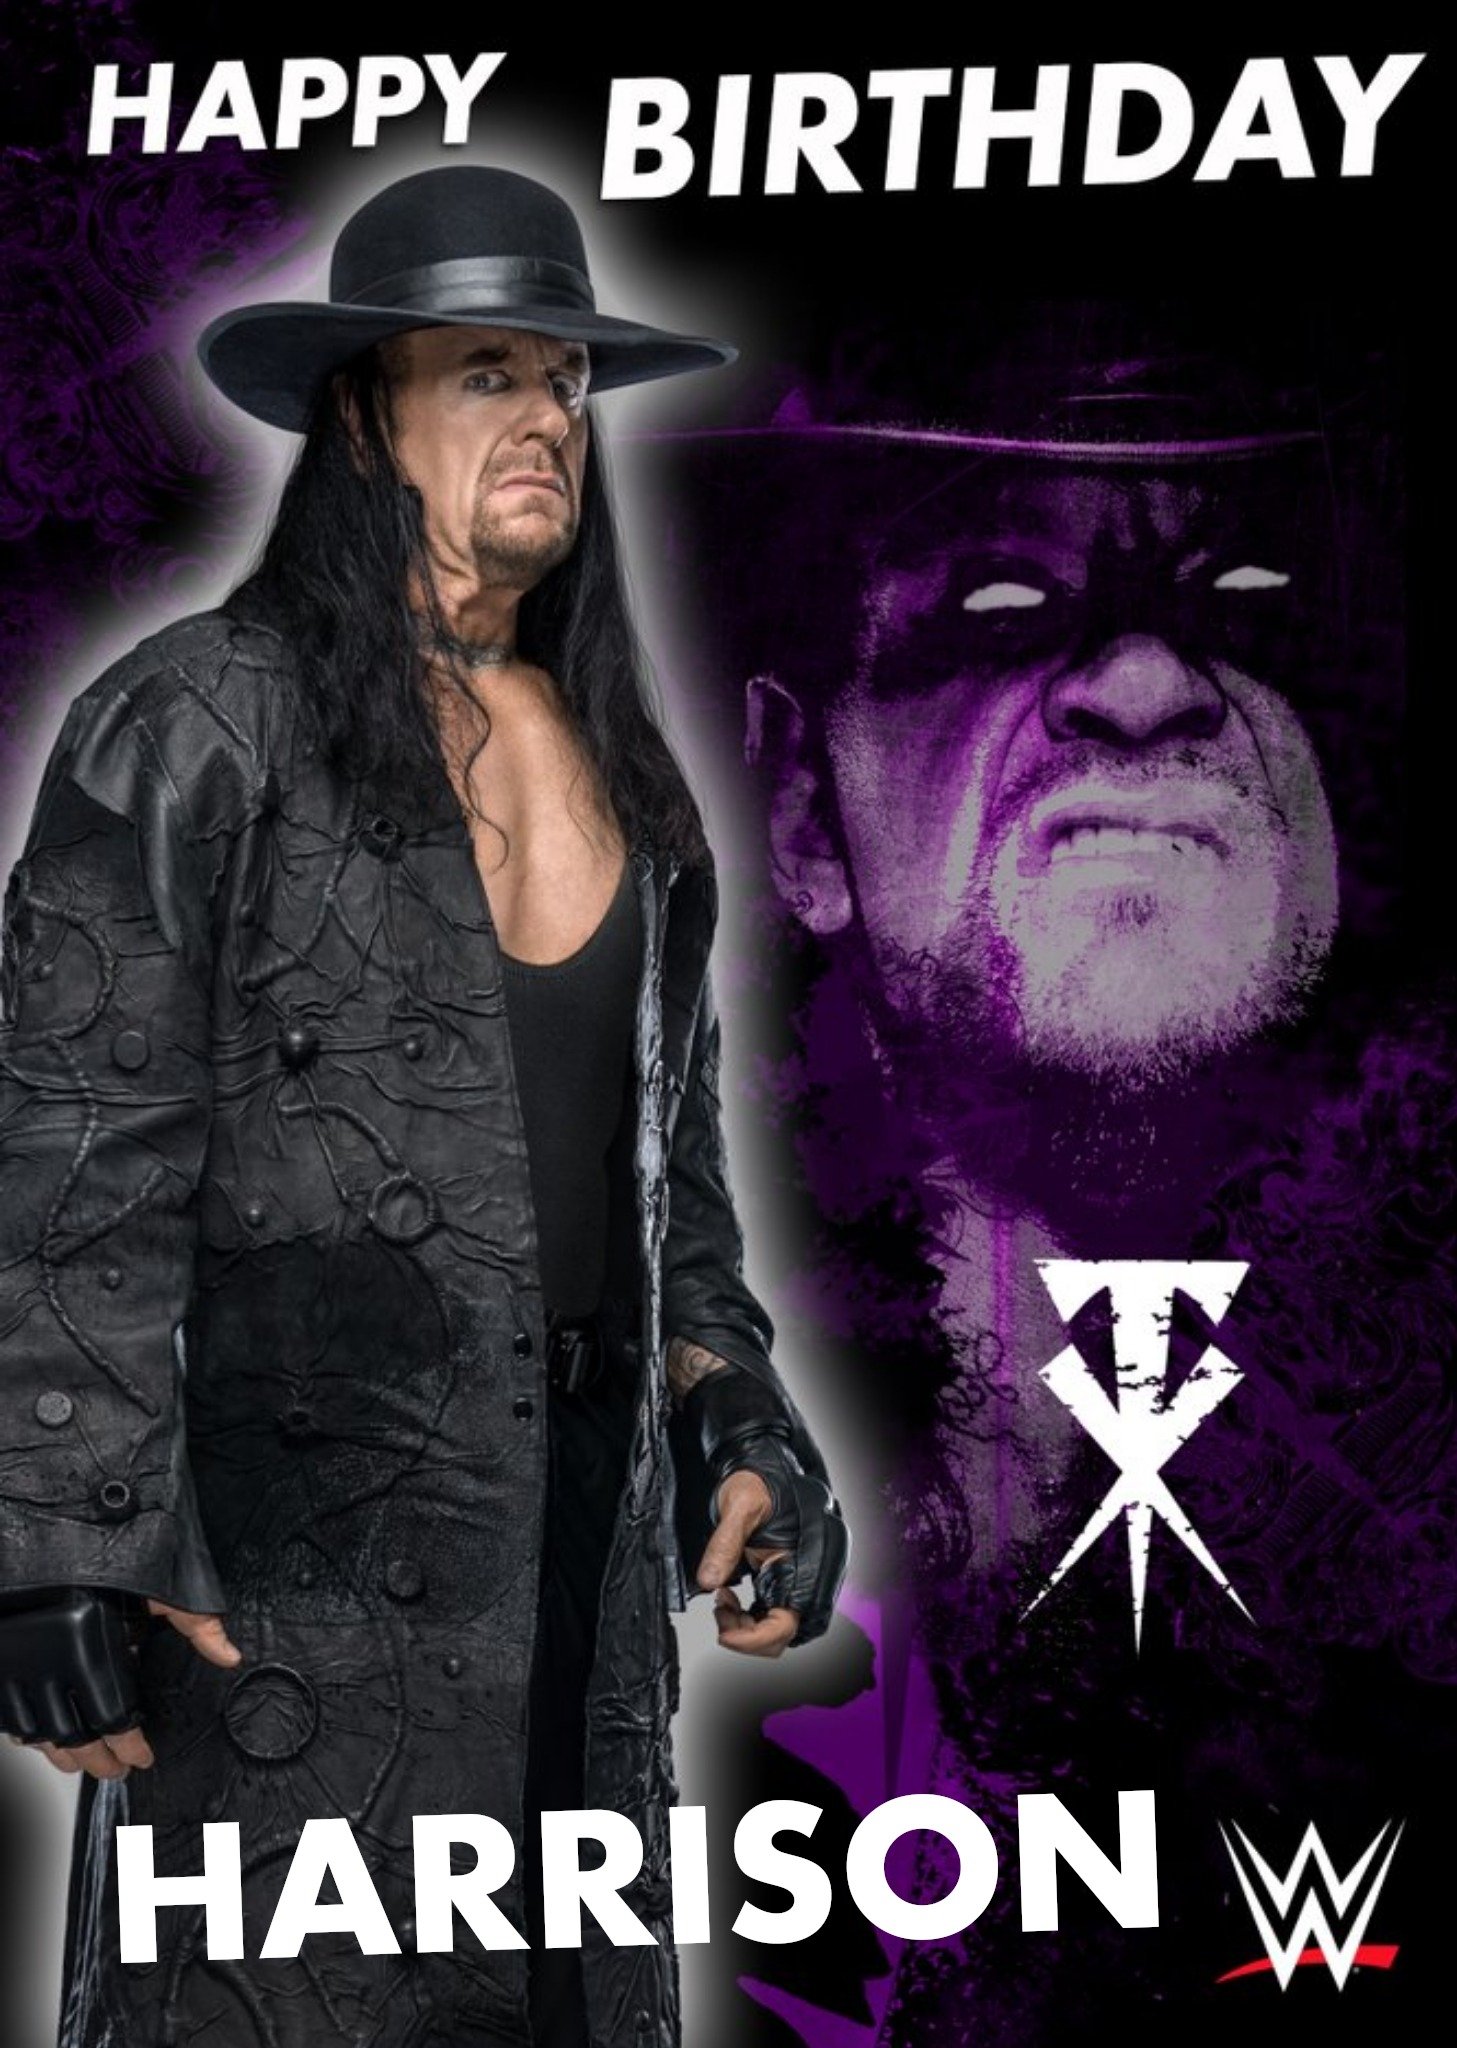 Wwe The Undertaker Birthday Card, Large